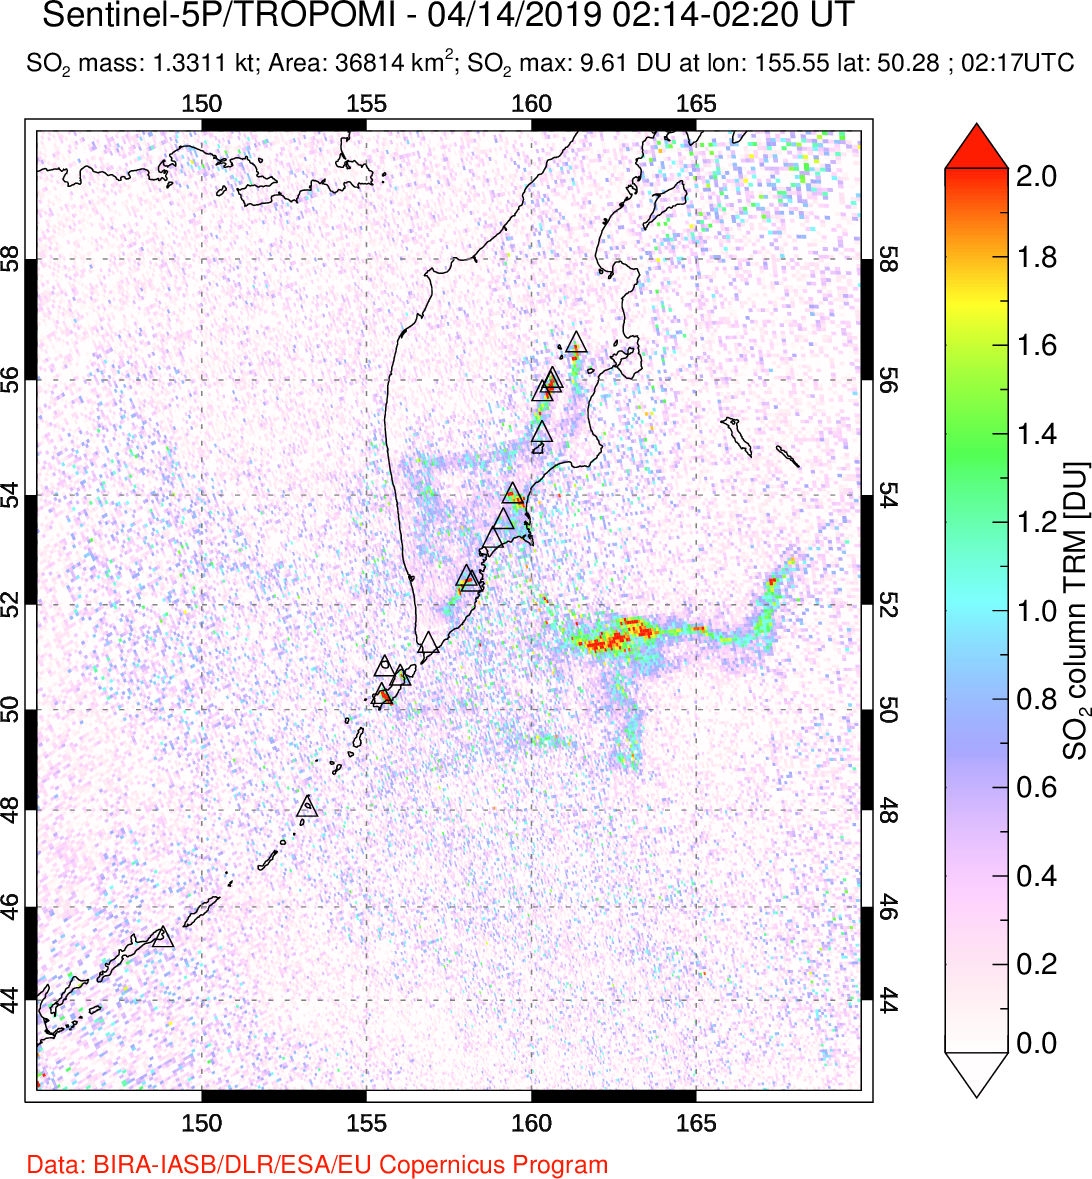 A sulfur dioxide image over Kamchatka, Russian Federation on Apr 14, 2019.